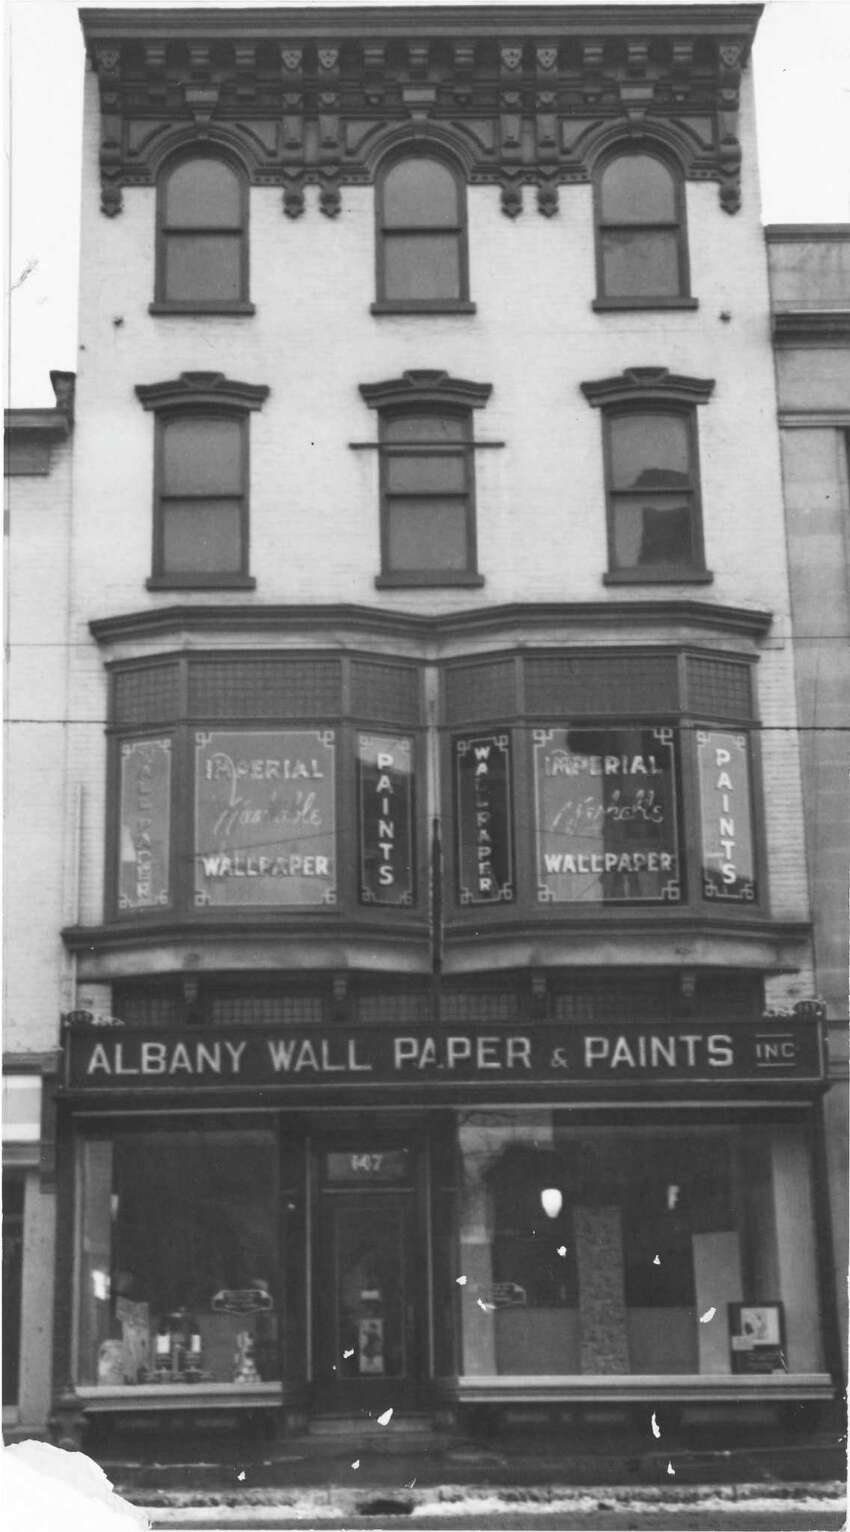 Albany Wall Paper & Paints Inc. au 147 South Pearl Street. Prise le 8 février 1937. (Times Union Archive)